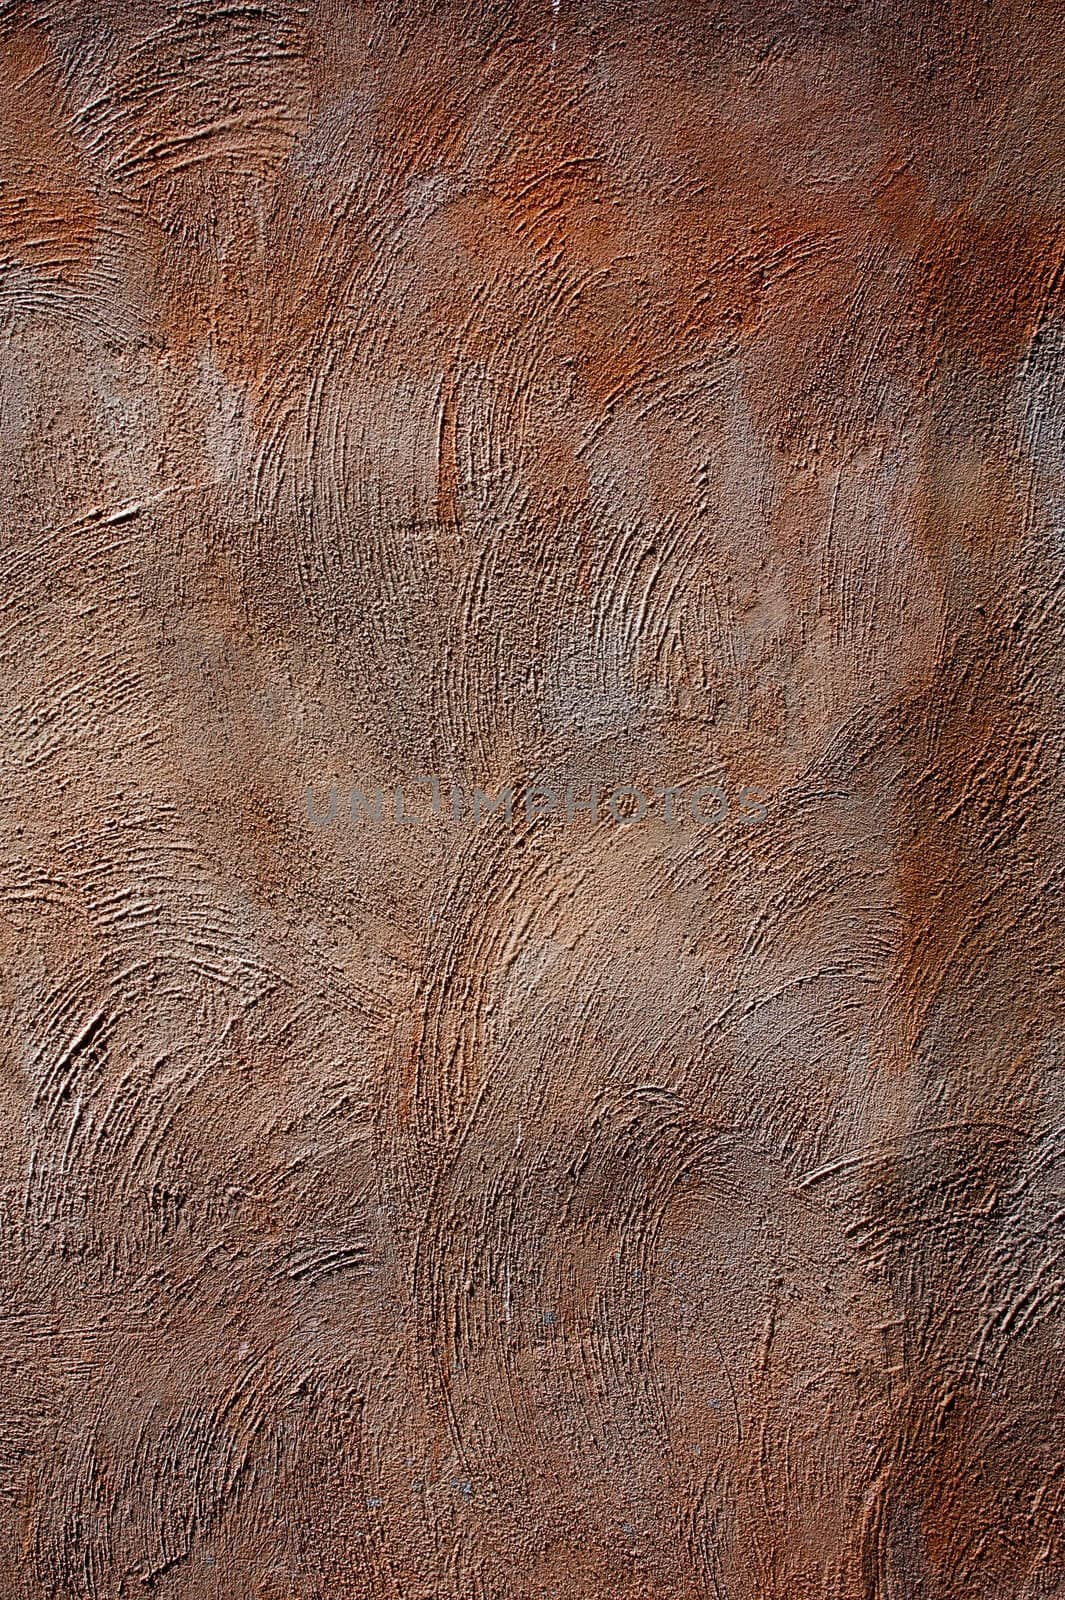 Orange Old Wall Background by nuttakit